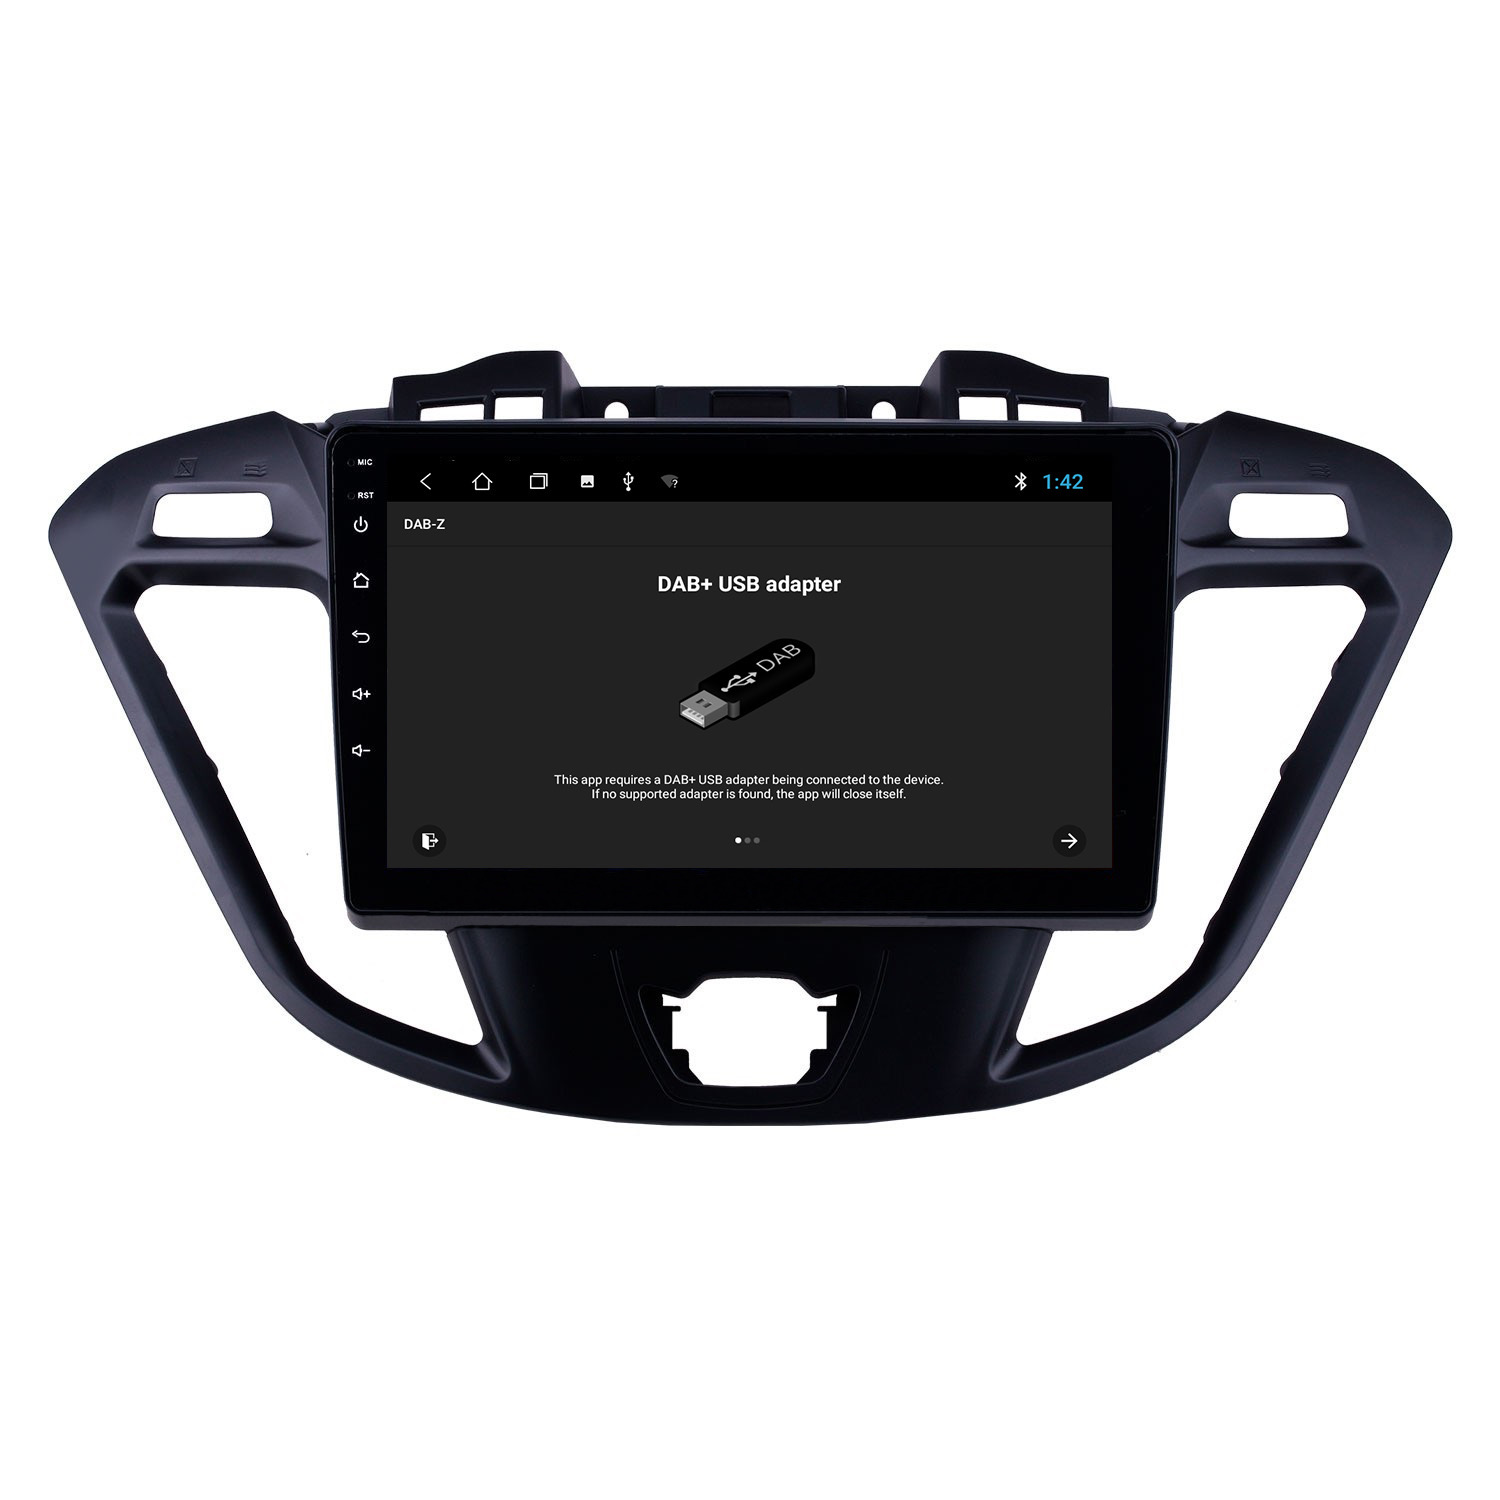 Ford transit custom 2013-2018 Navigatie carkit usb android 10